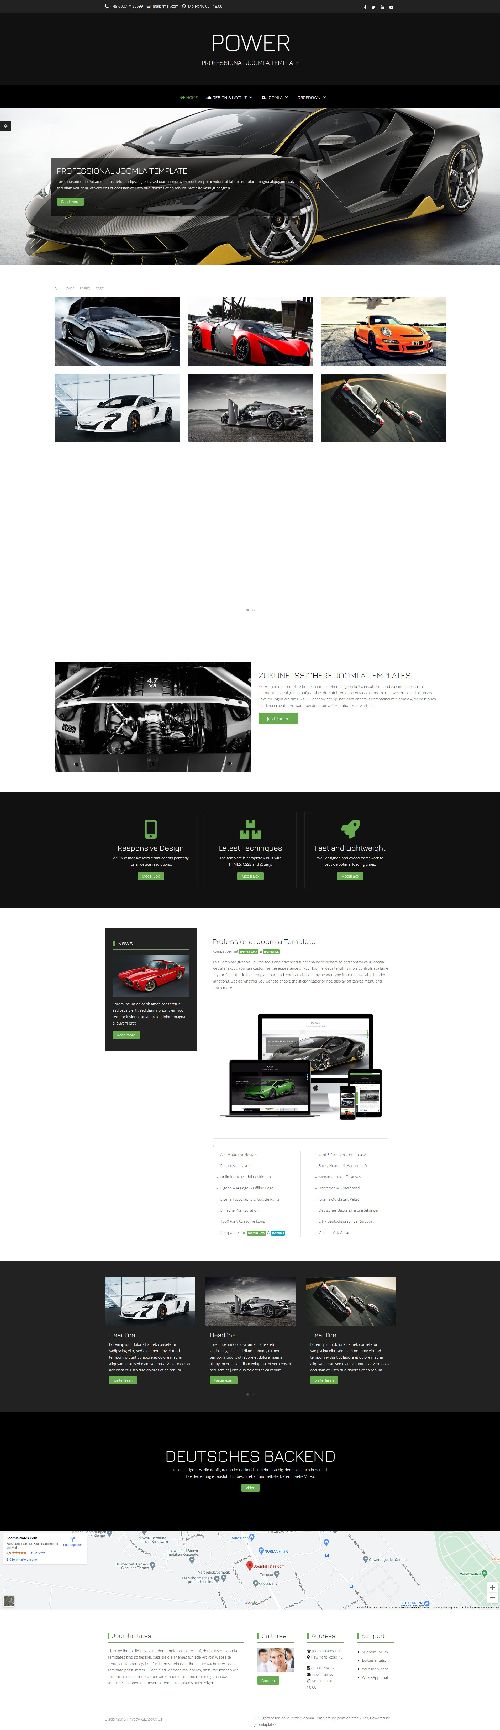 Power - Cars Sellers, Detailling Websites Joomla 4 Template